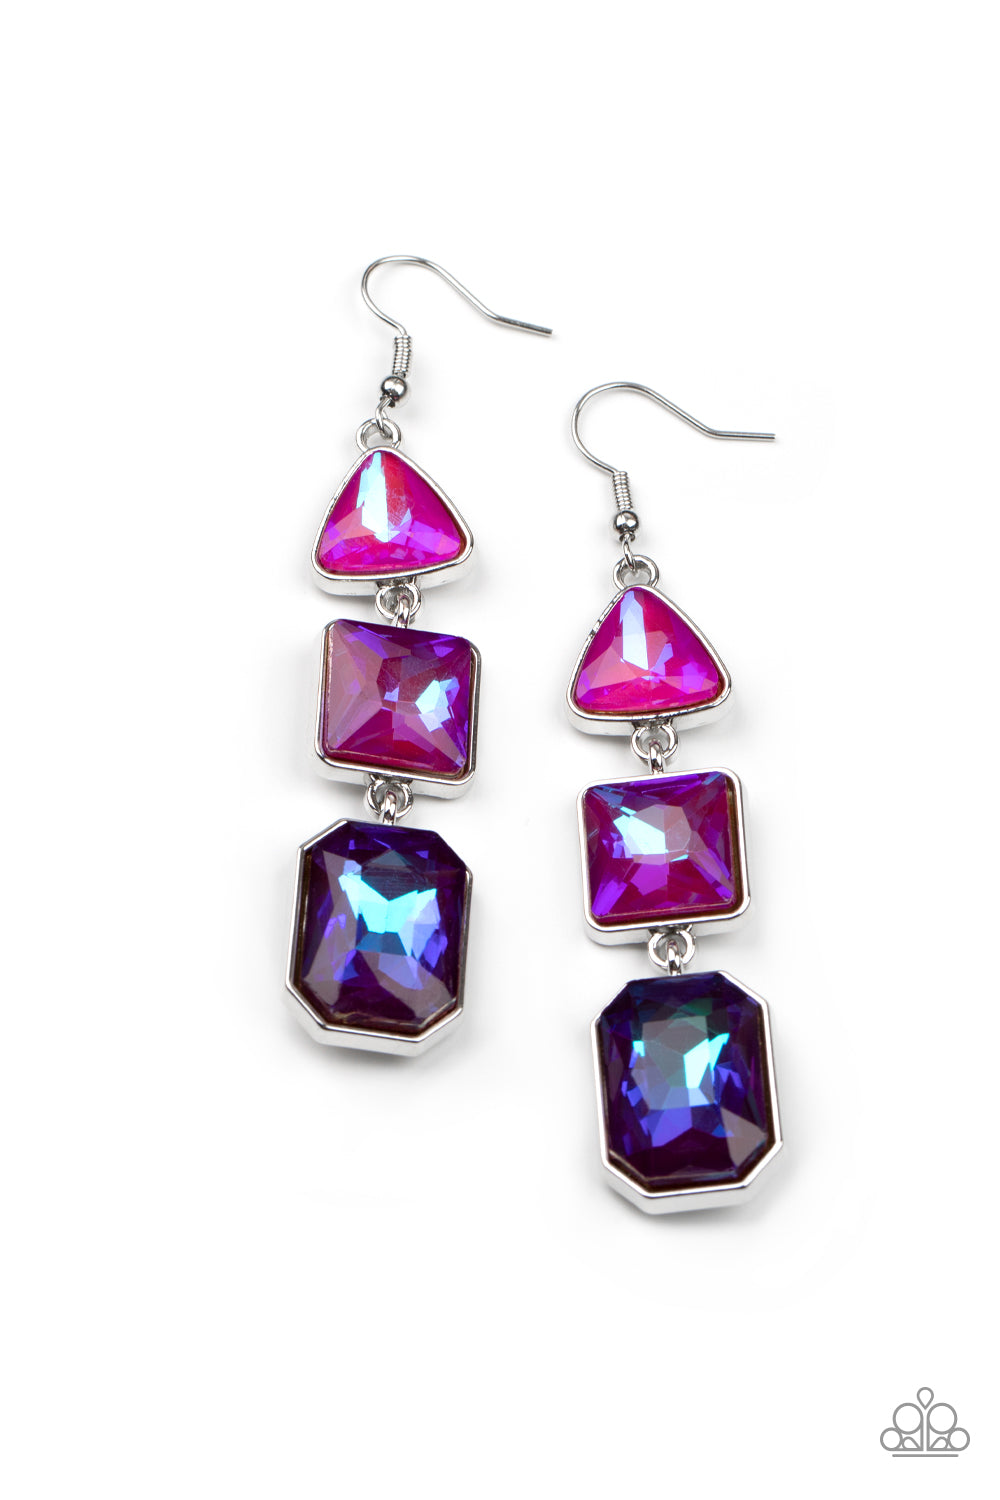 Paparazzi Accessories - Cosmic Culture #E631 - Purple EarringsPaparazzi Accessories - Cosmic Culture #E631 - Purple Earrings